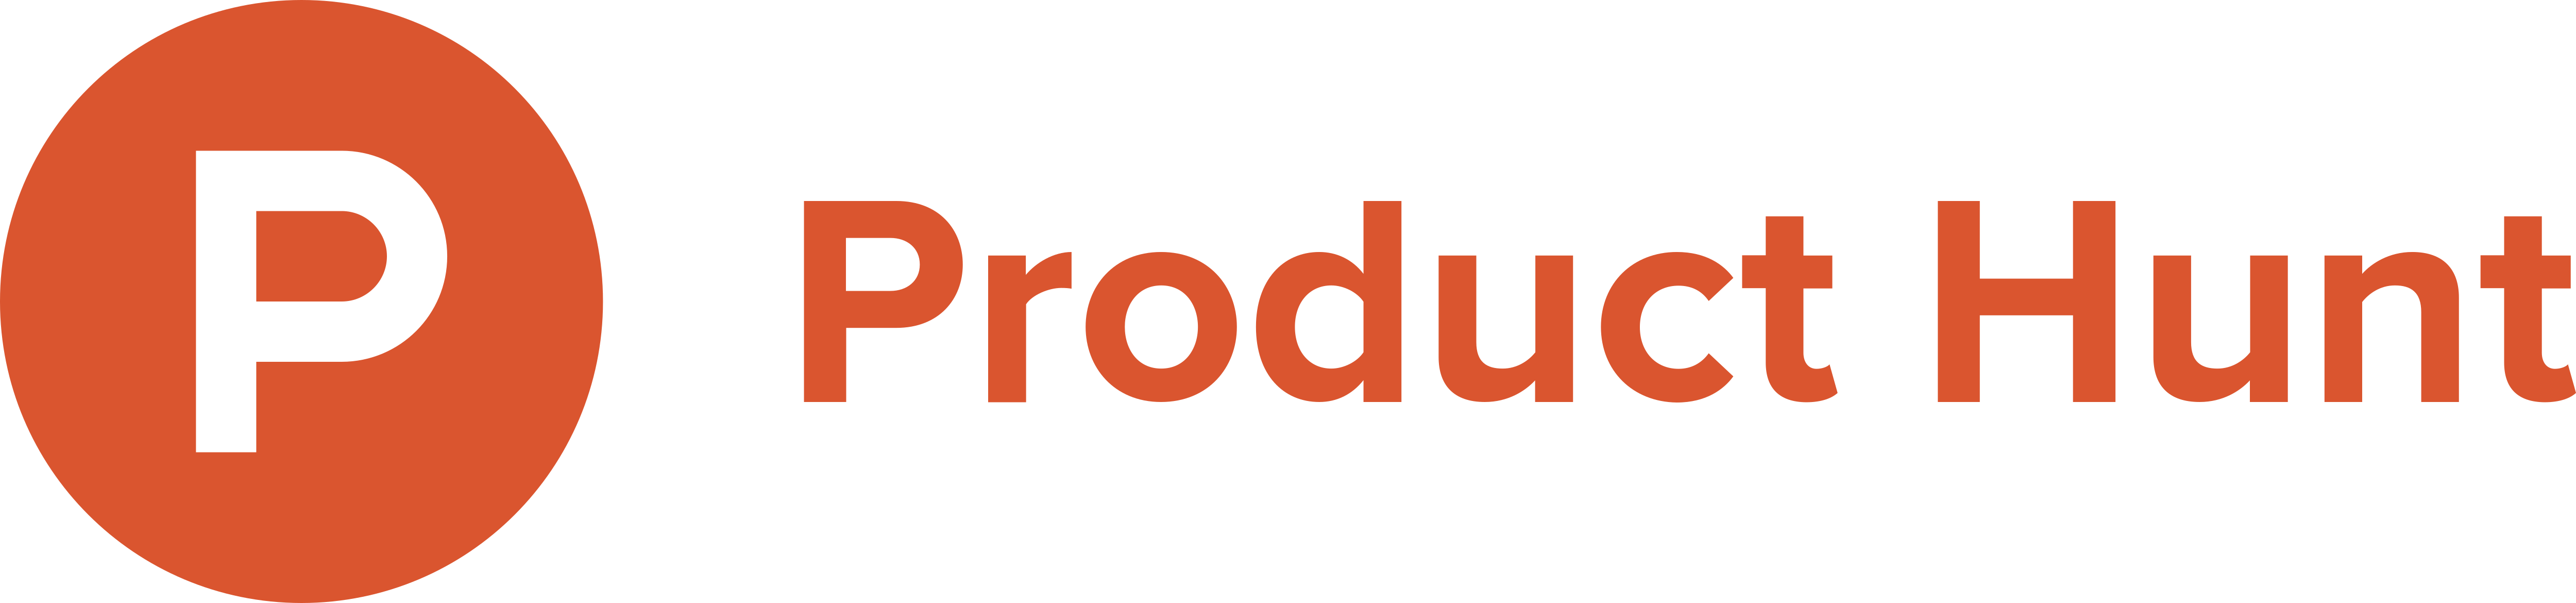 product hunt logo png